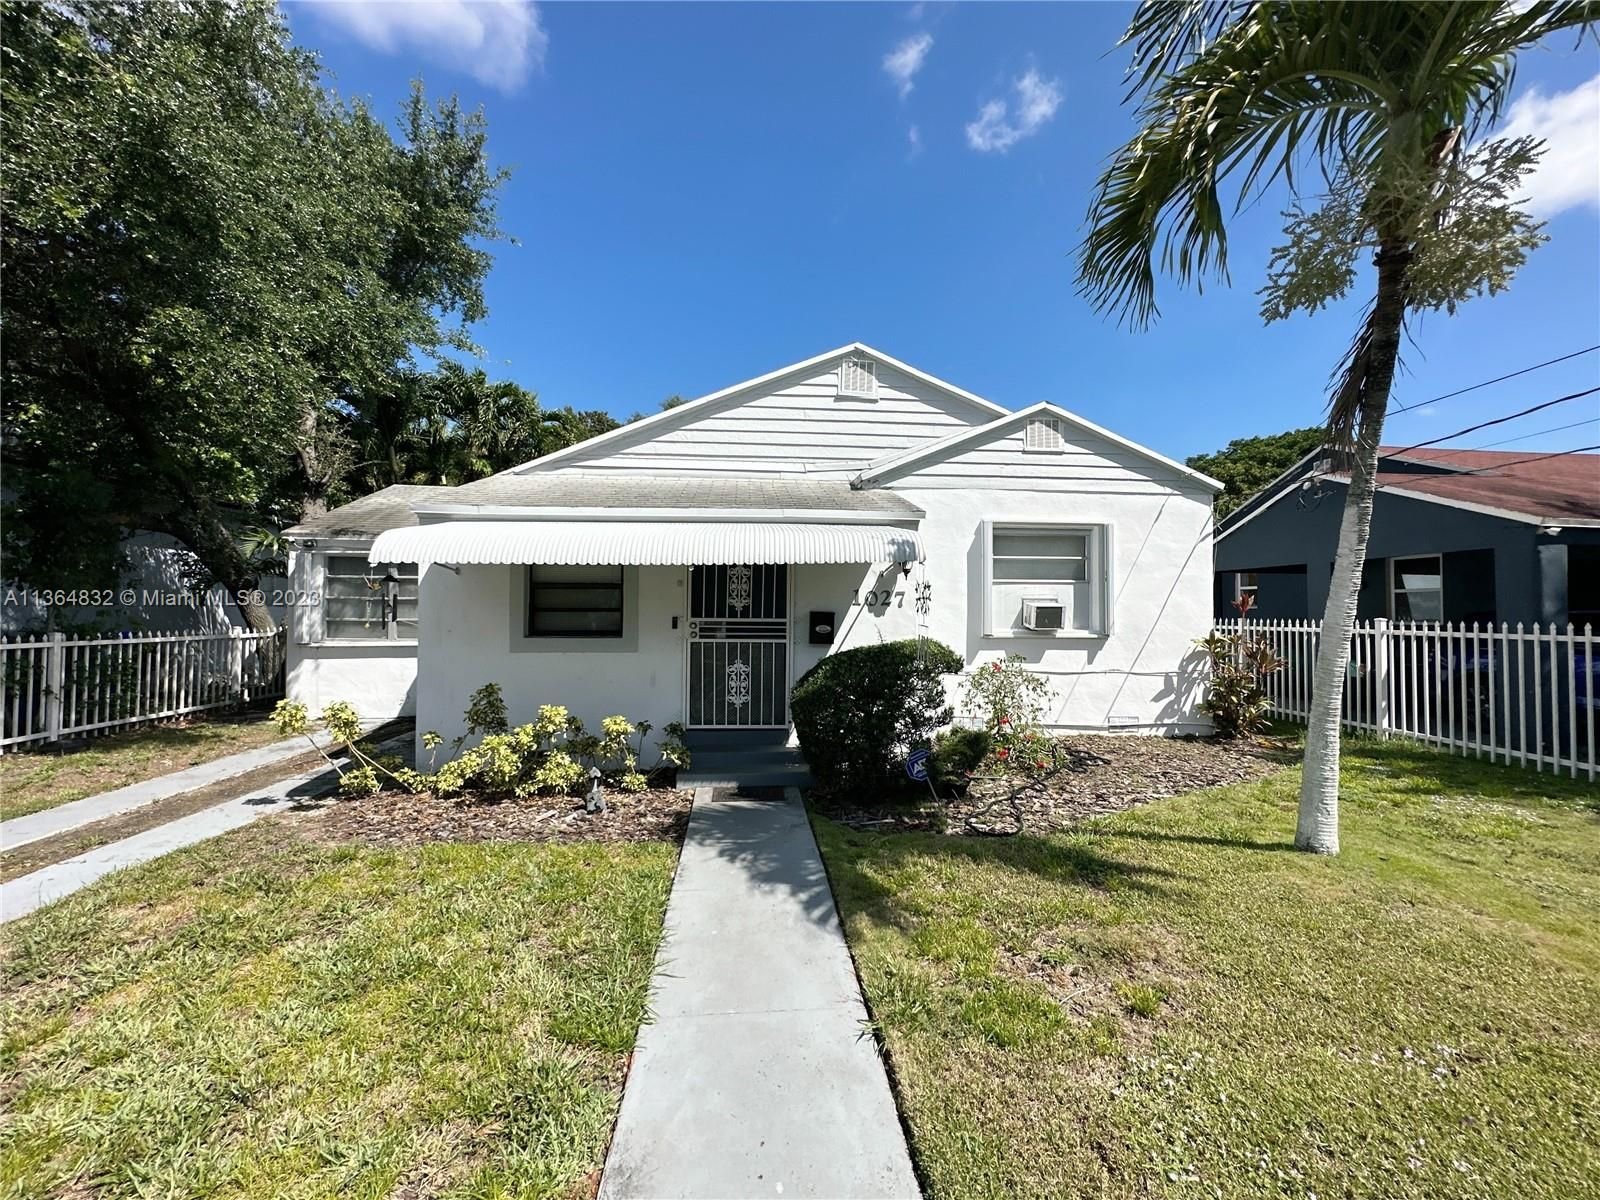 Real estate property located at 1027 34th St, Miami-Dade County, Miami, FL